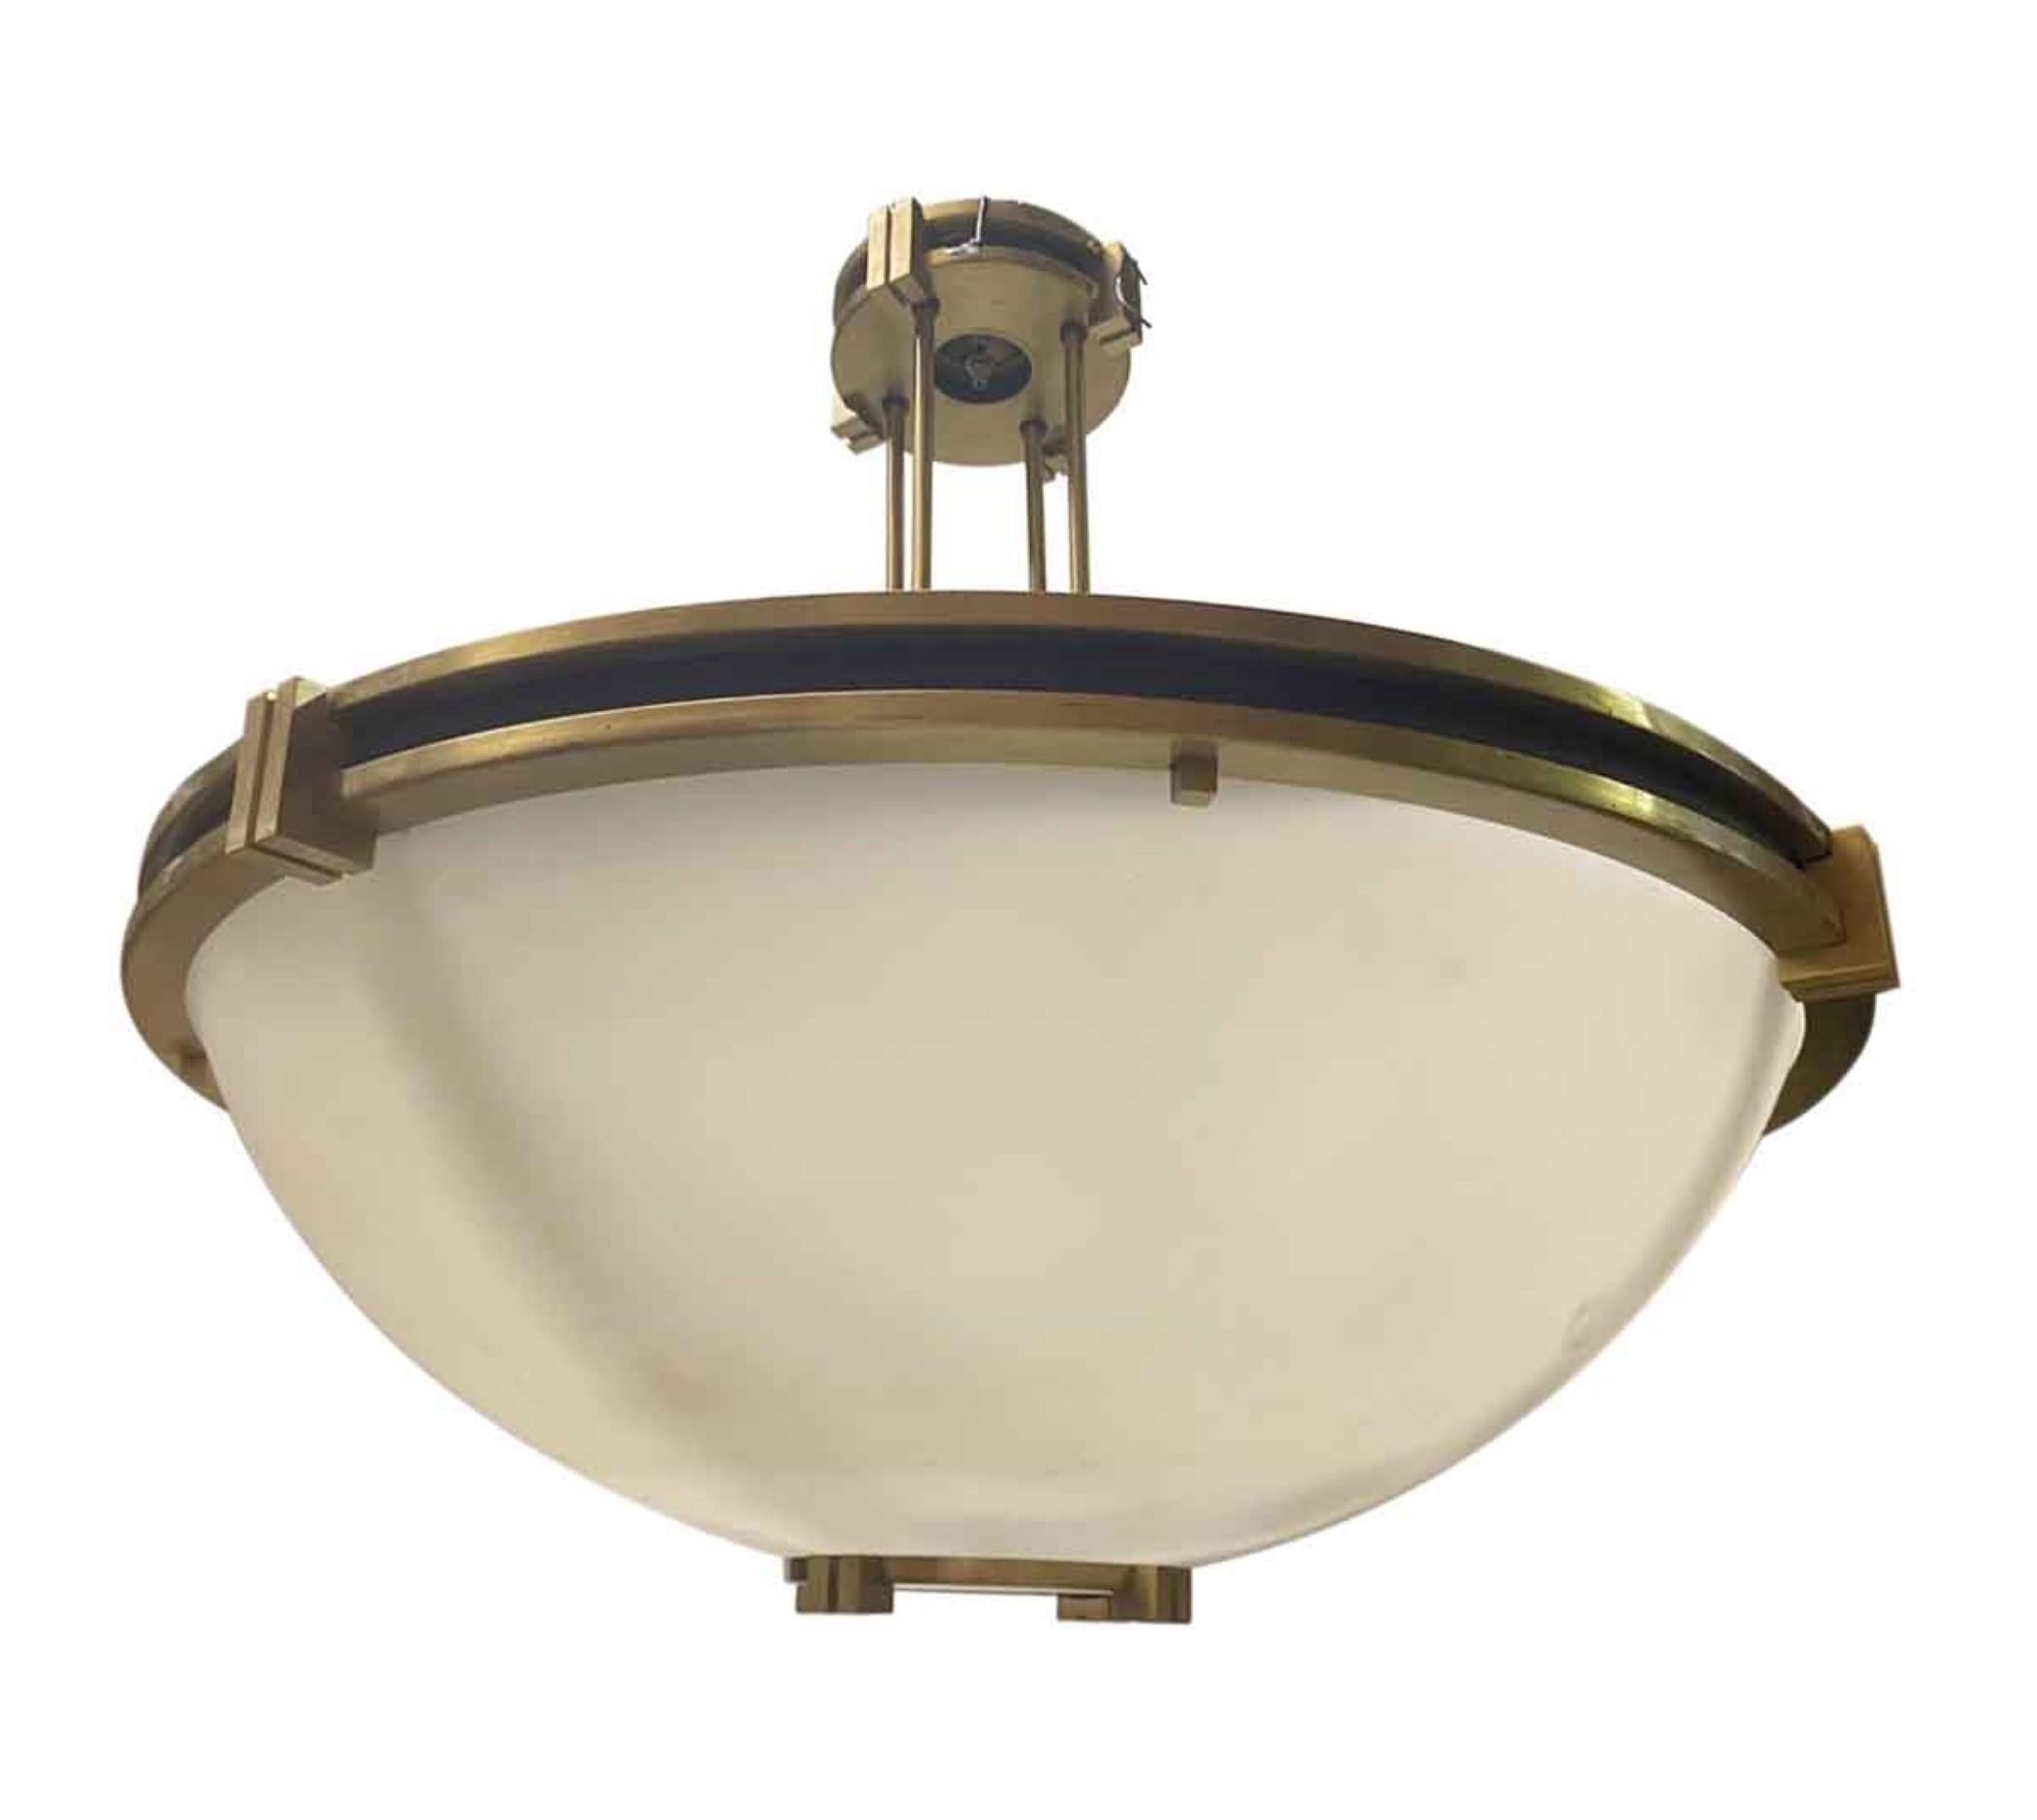 Mid-20th Century 1950s Art Deco Brass Dish Pendant Light from a Manhattan Bank